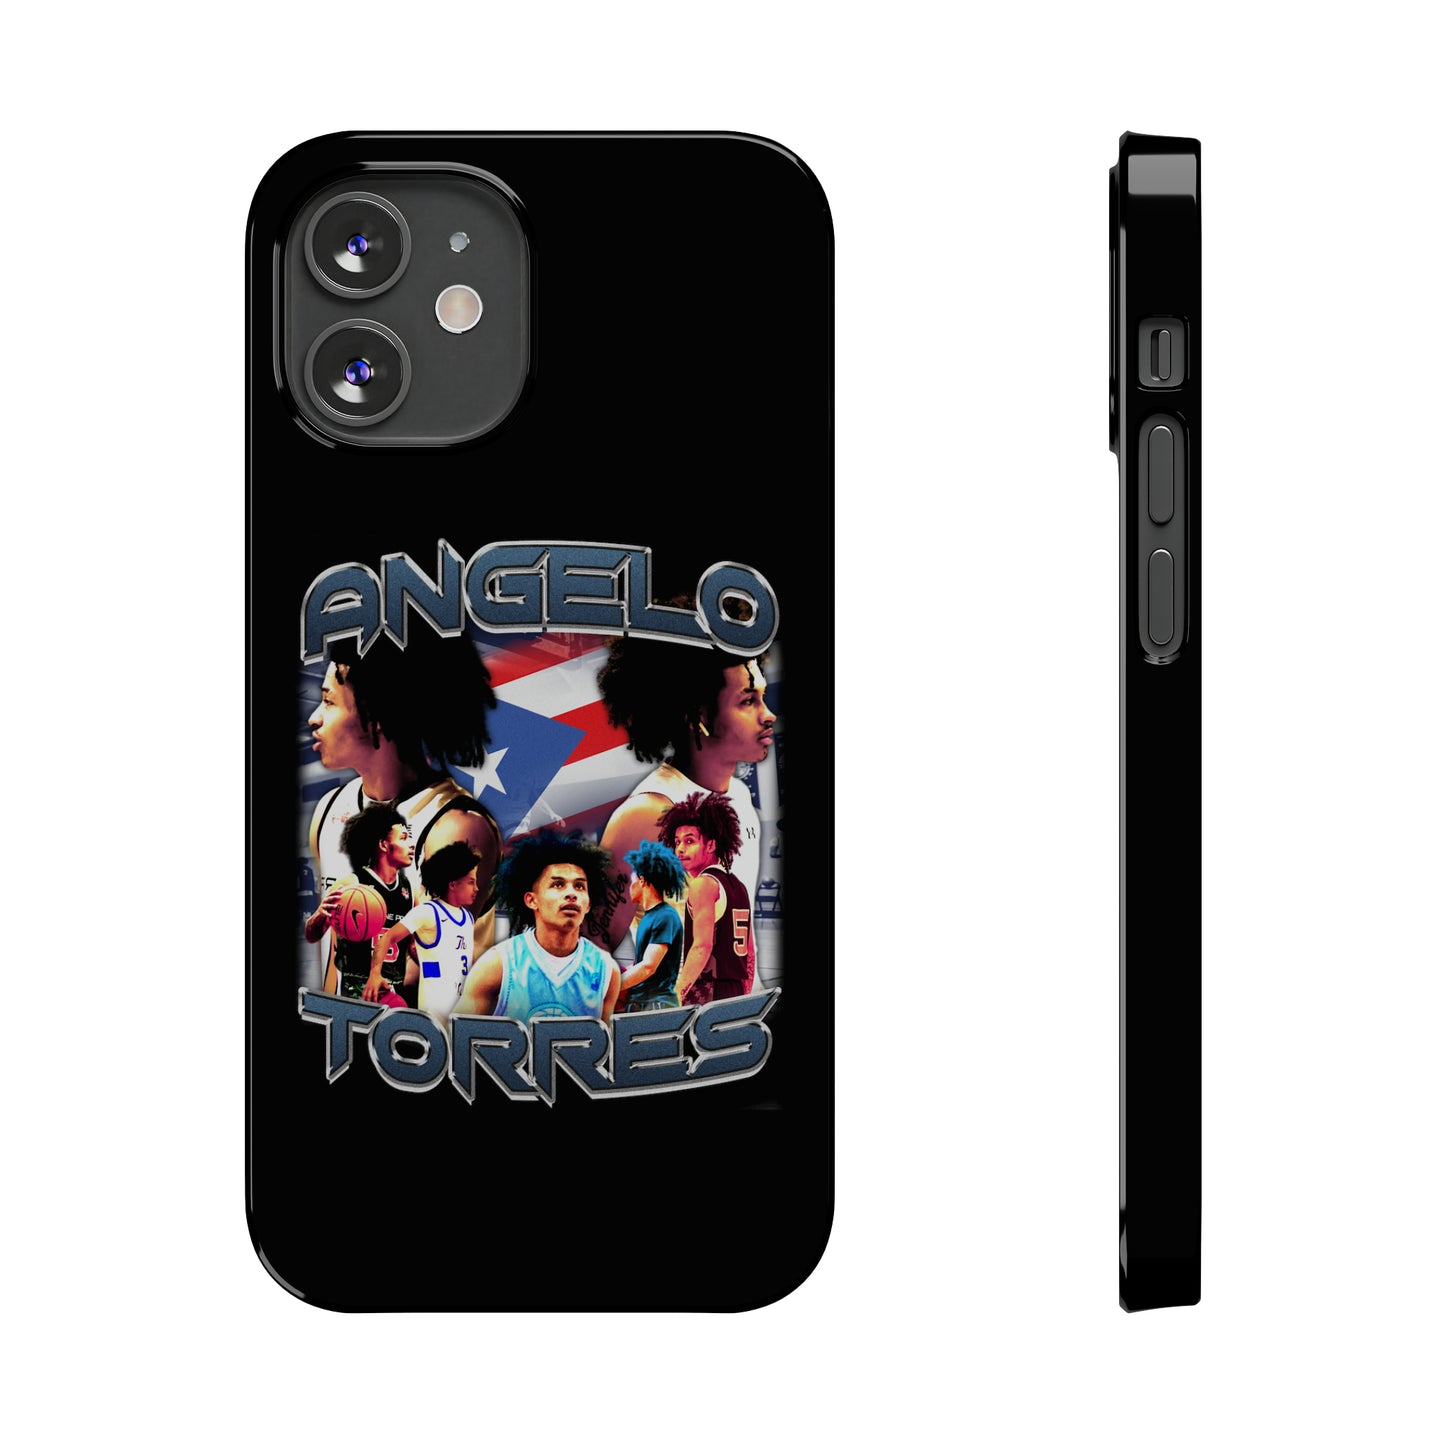 Angelo Torres Slim Phone Cases